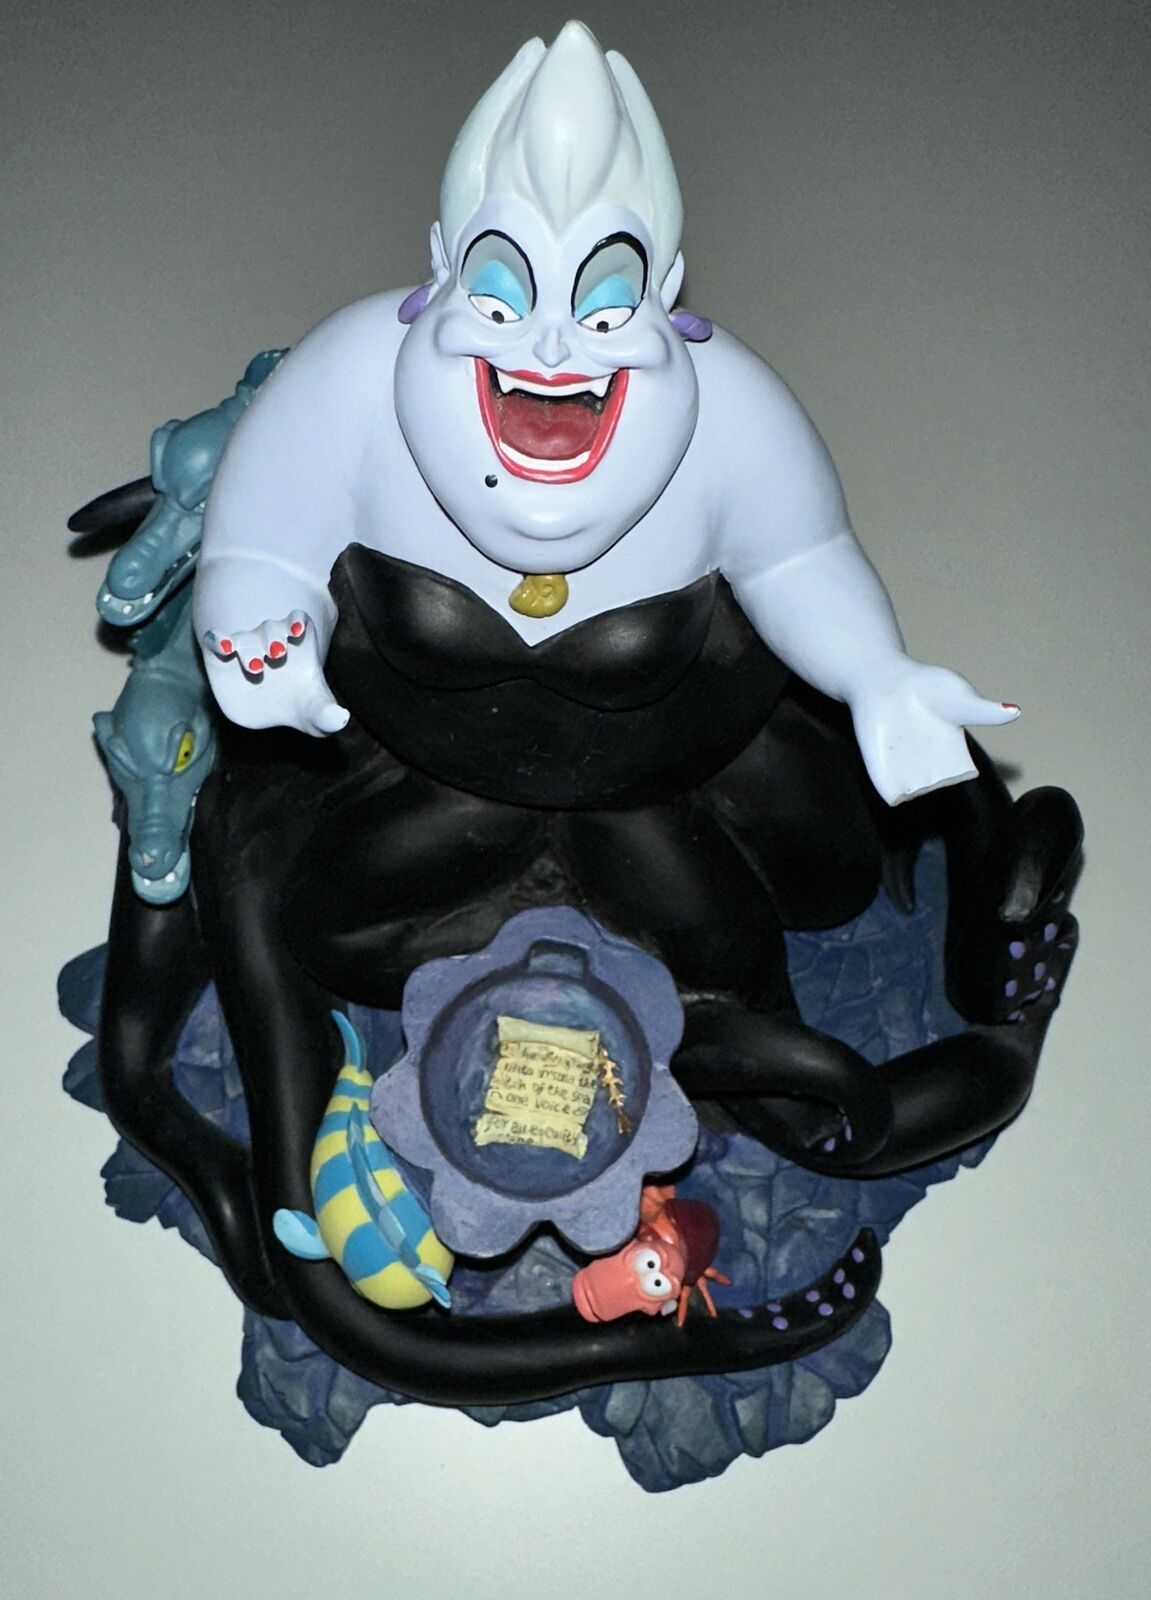 Disney Little Mermaid Ursula Sculpture, Missing The Mini Snowglobe